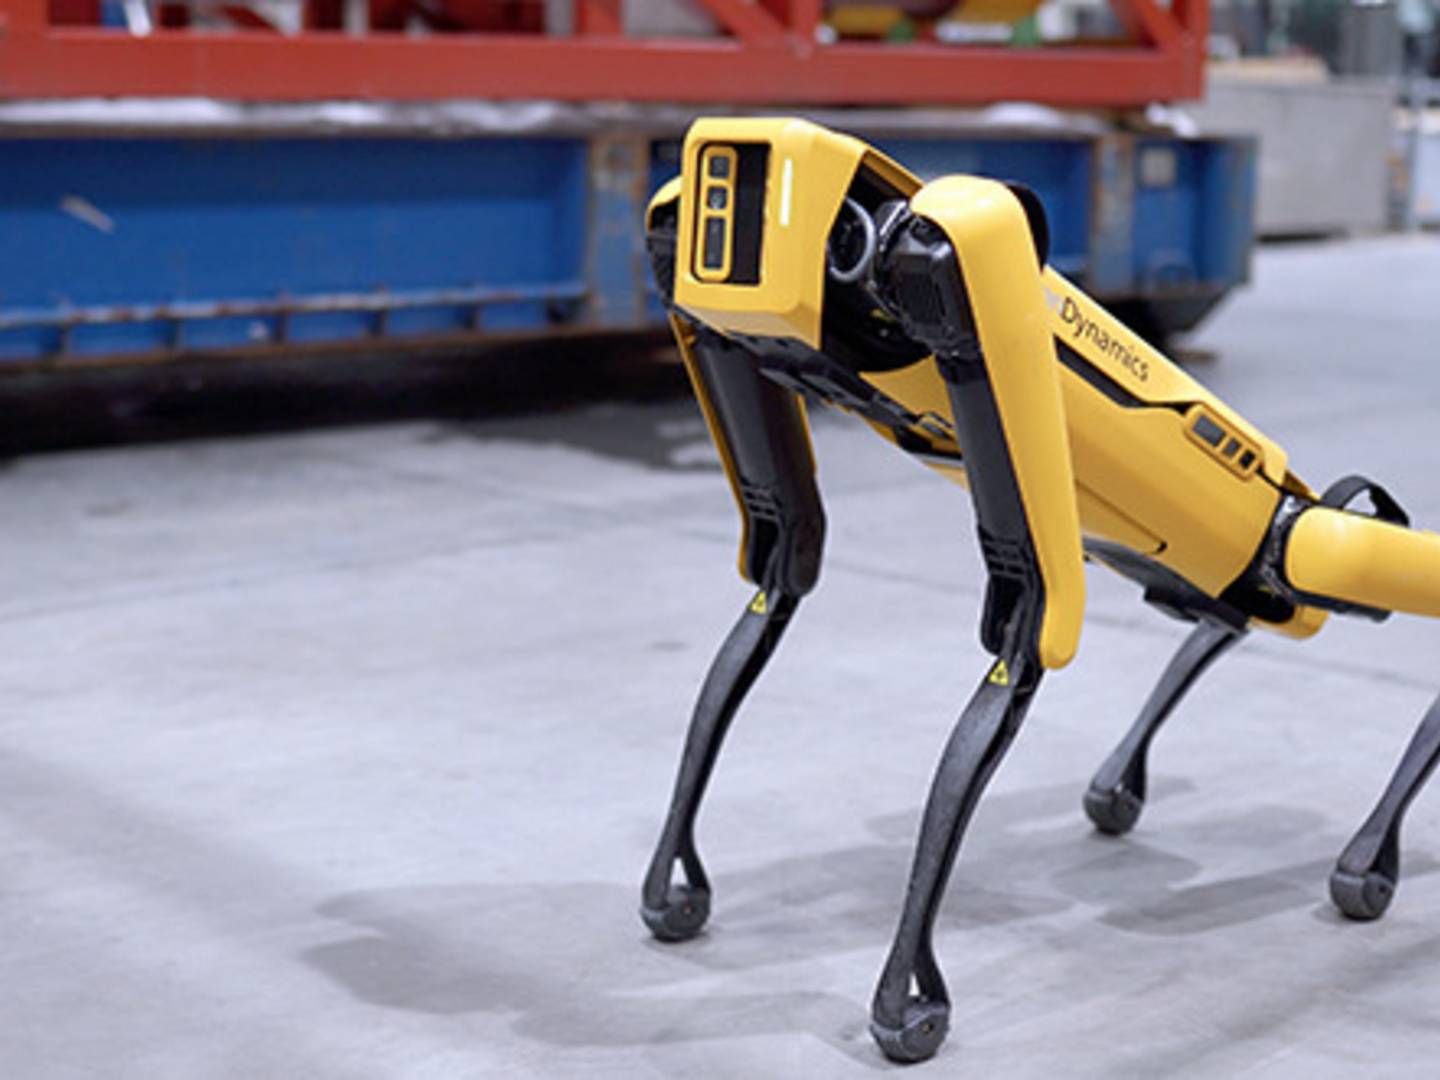 Aker BP's robothund Spot er bare et eksempel på den stigende tendens til robotter inden for olie- og gasindustrien. | Foto: Aker BP PR